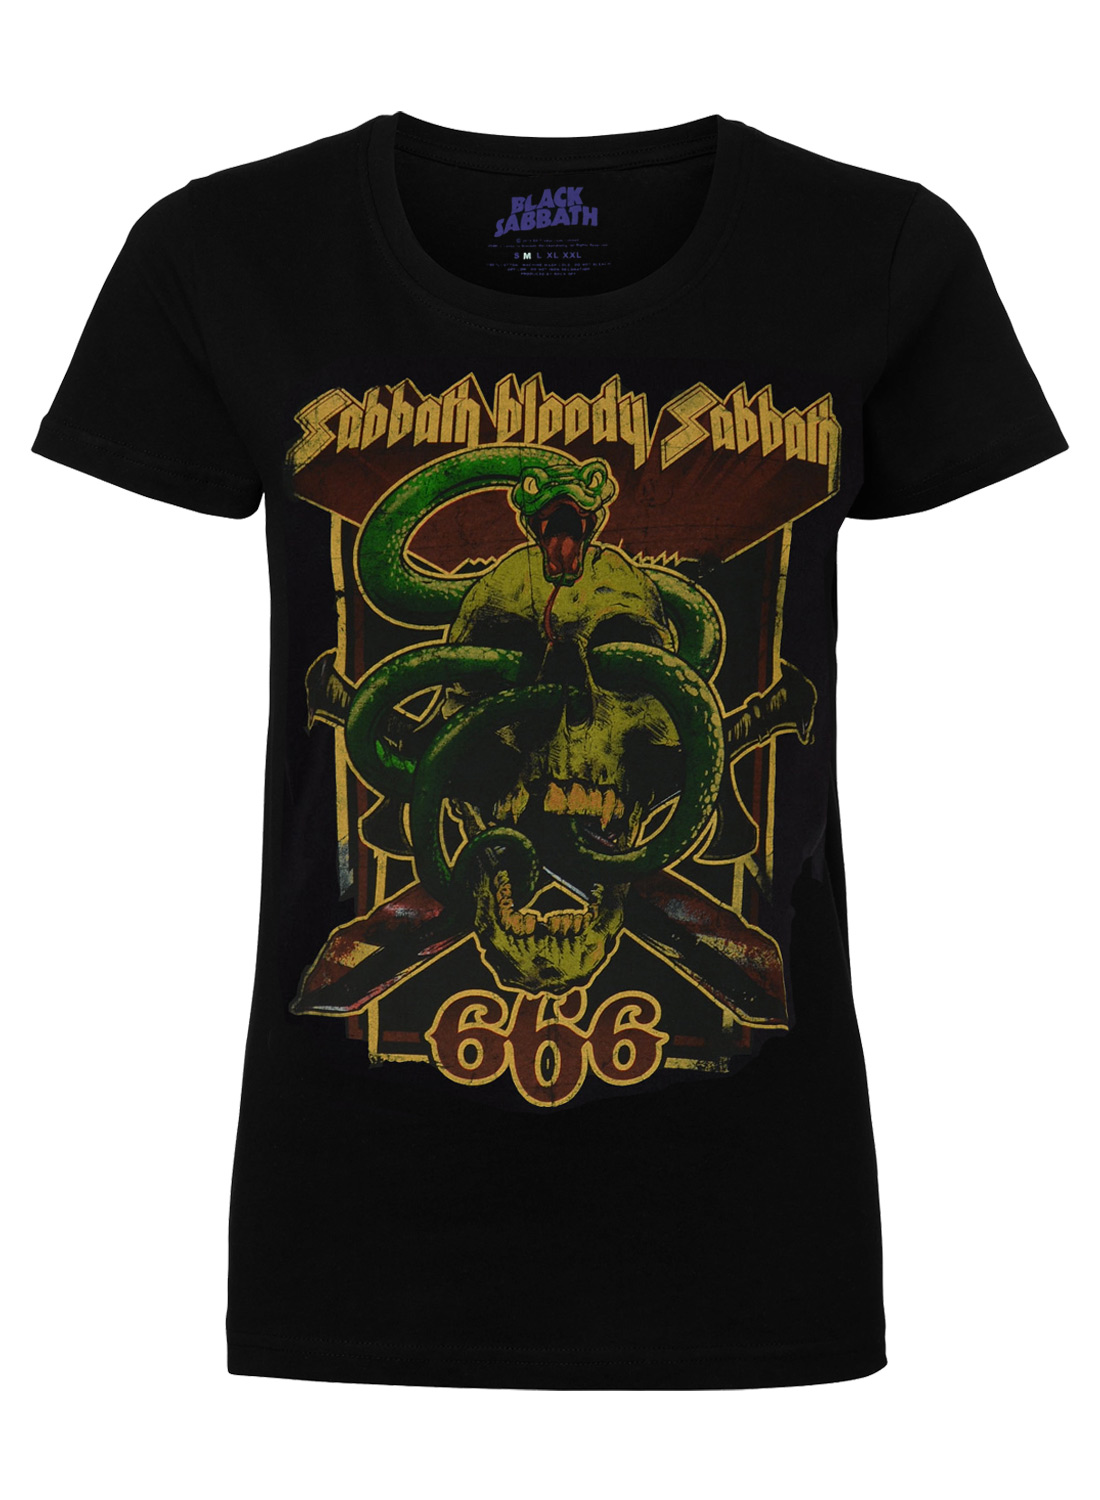 Black Sabbath Bloody Sabbath 666 Girly T